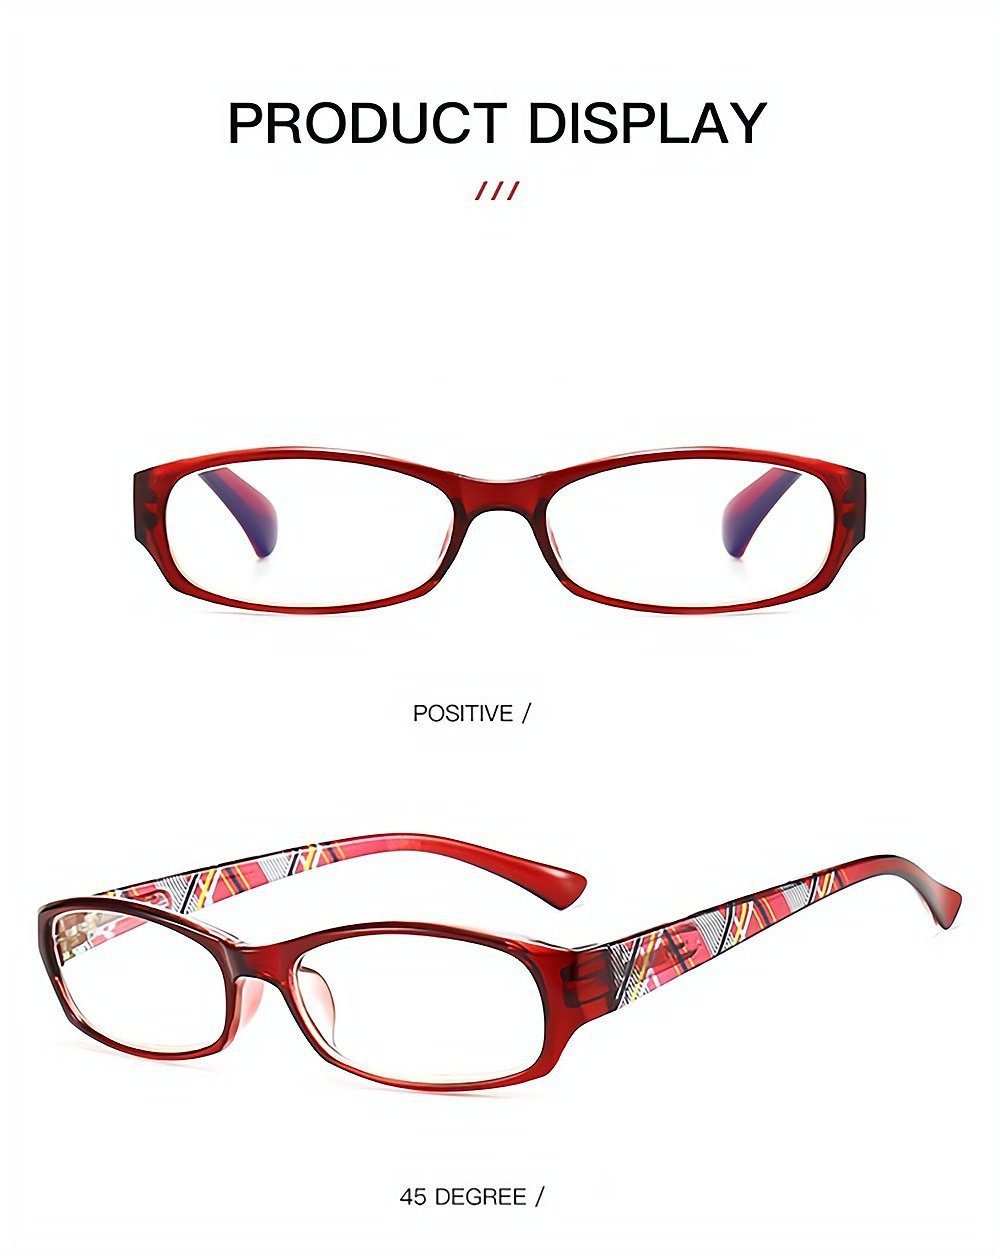 Rahmen Lesebrille Gläser rot anti blaue bedruckte presbyopische Mode PACIEA